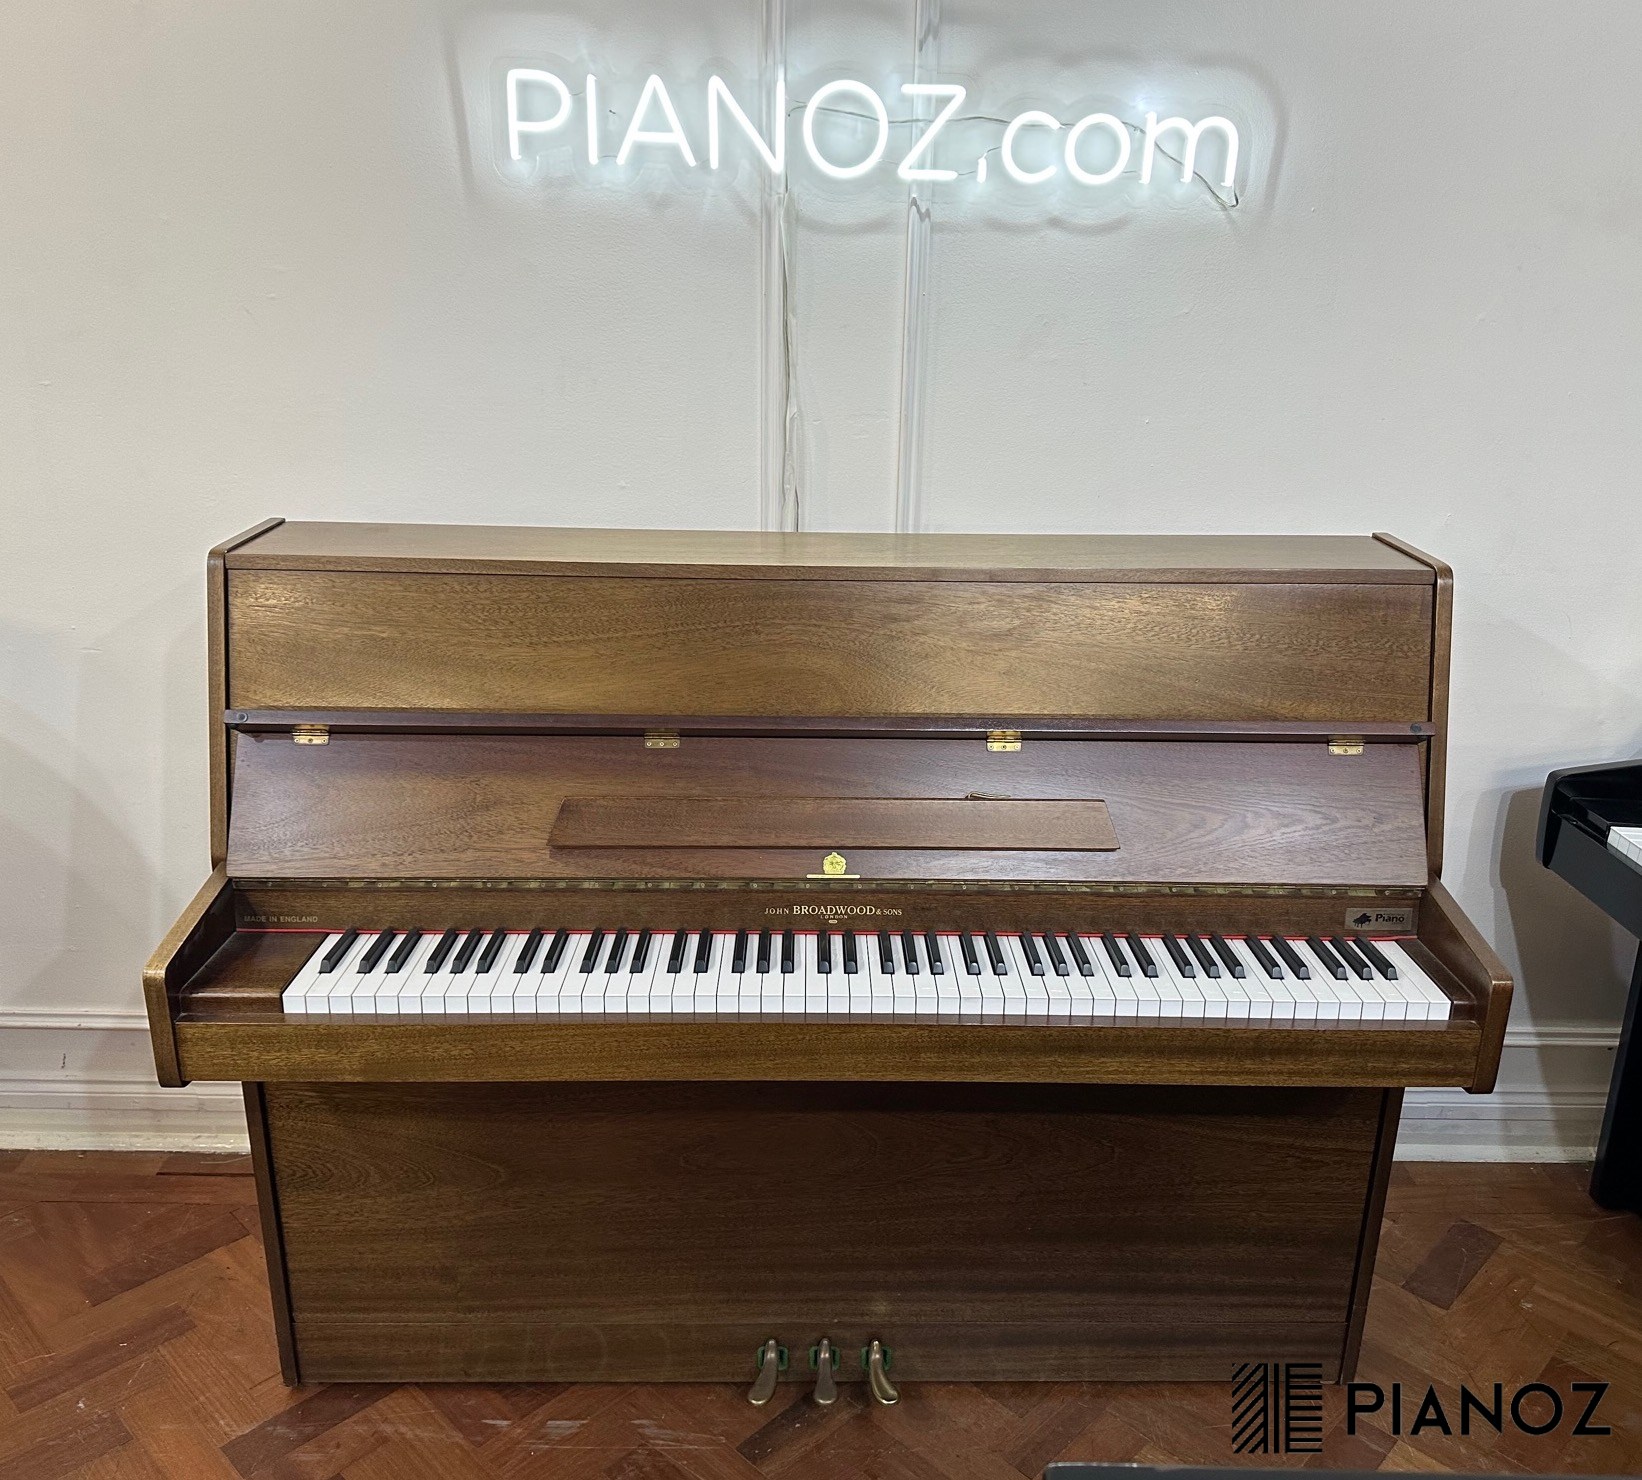 Broadwood 1999 Upright Piano piano for sale in UK